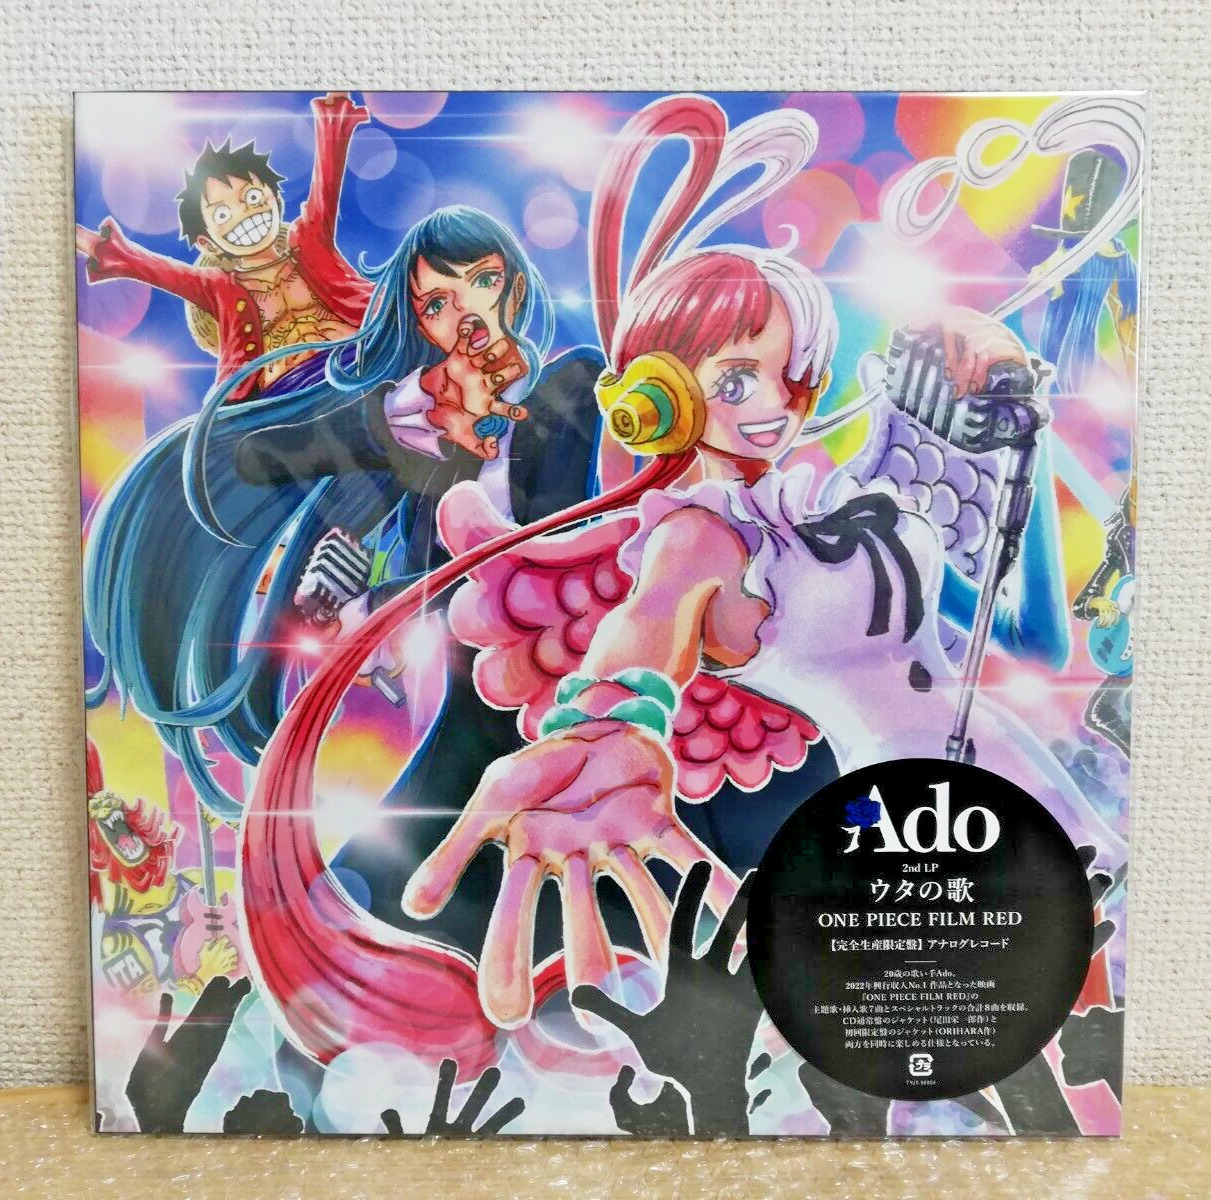 Ado Uta no Uta One Piece Film Red Limited Edition Vinyl LP Anime handling 1day